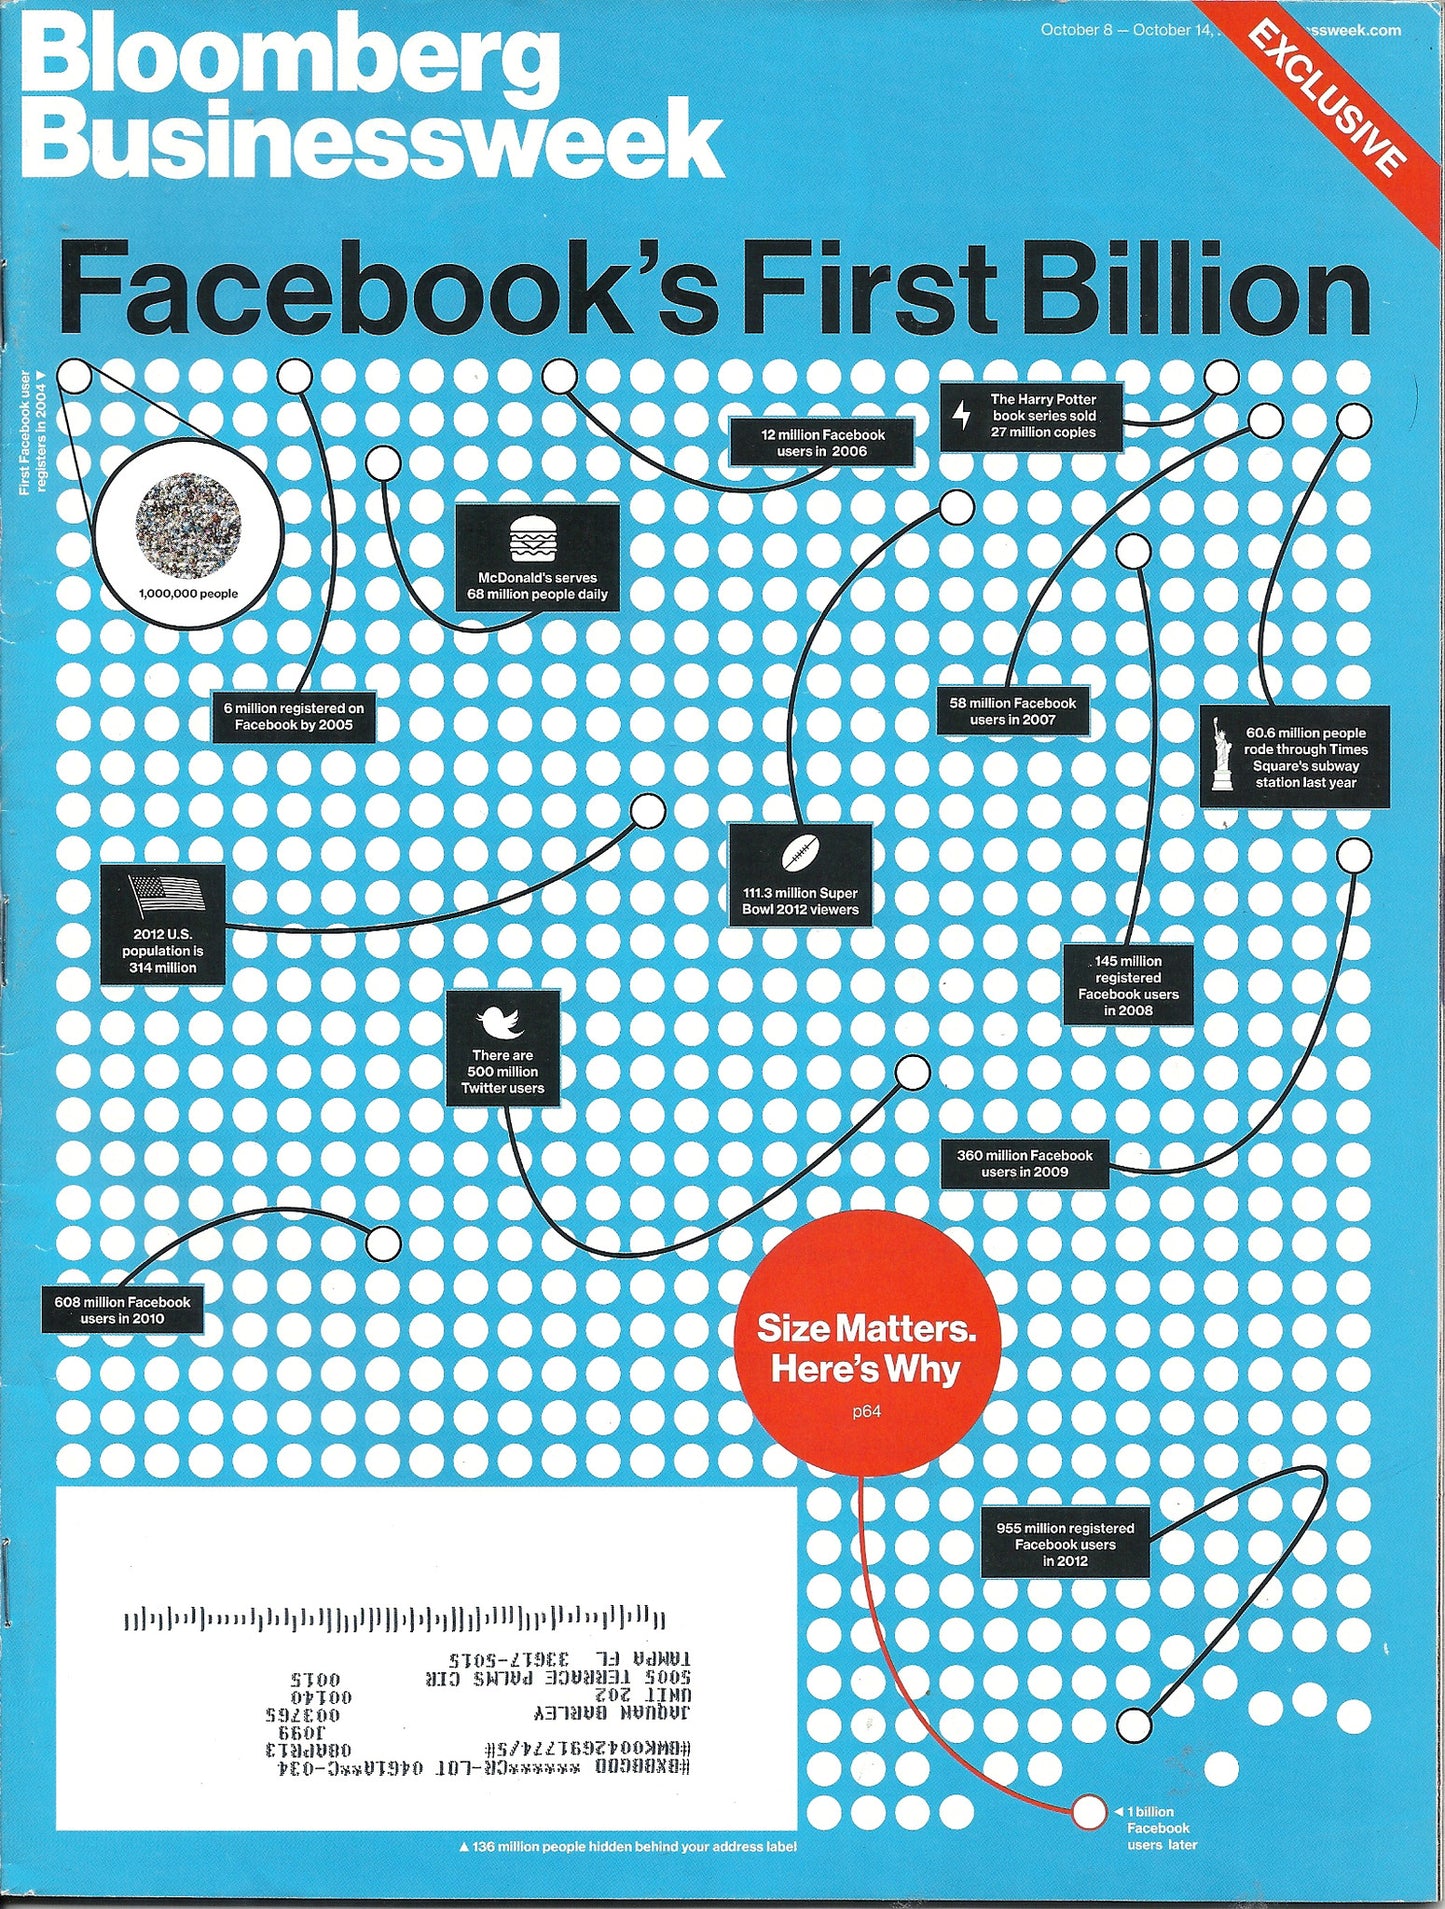 10 08 2012 Bloomberg Facebook's First Billion